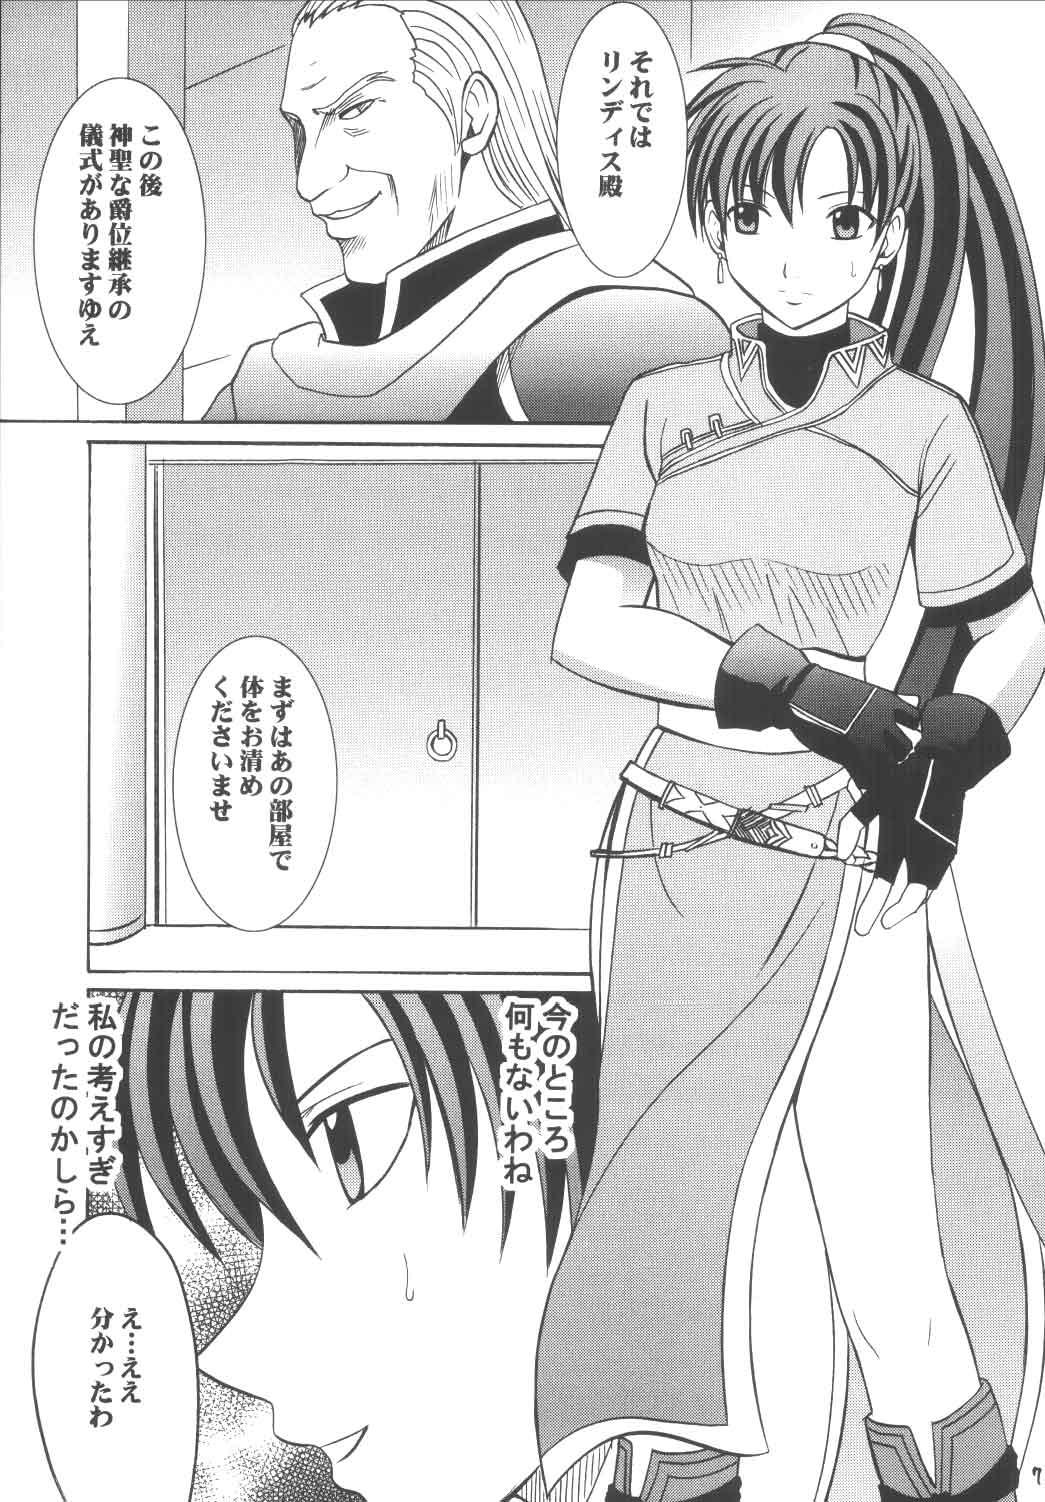 8teenxxx Rekka no Kizuato - Fire emblem rekka no ken Public - Page 6